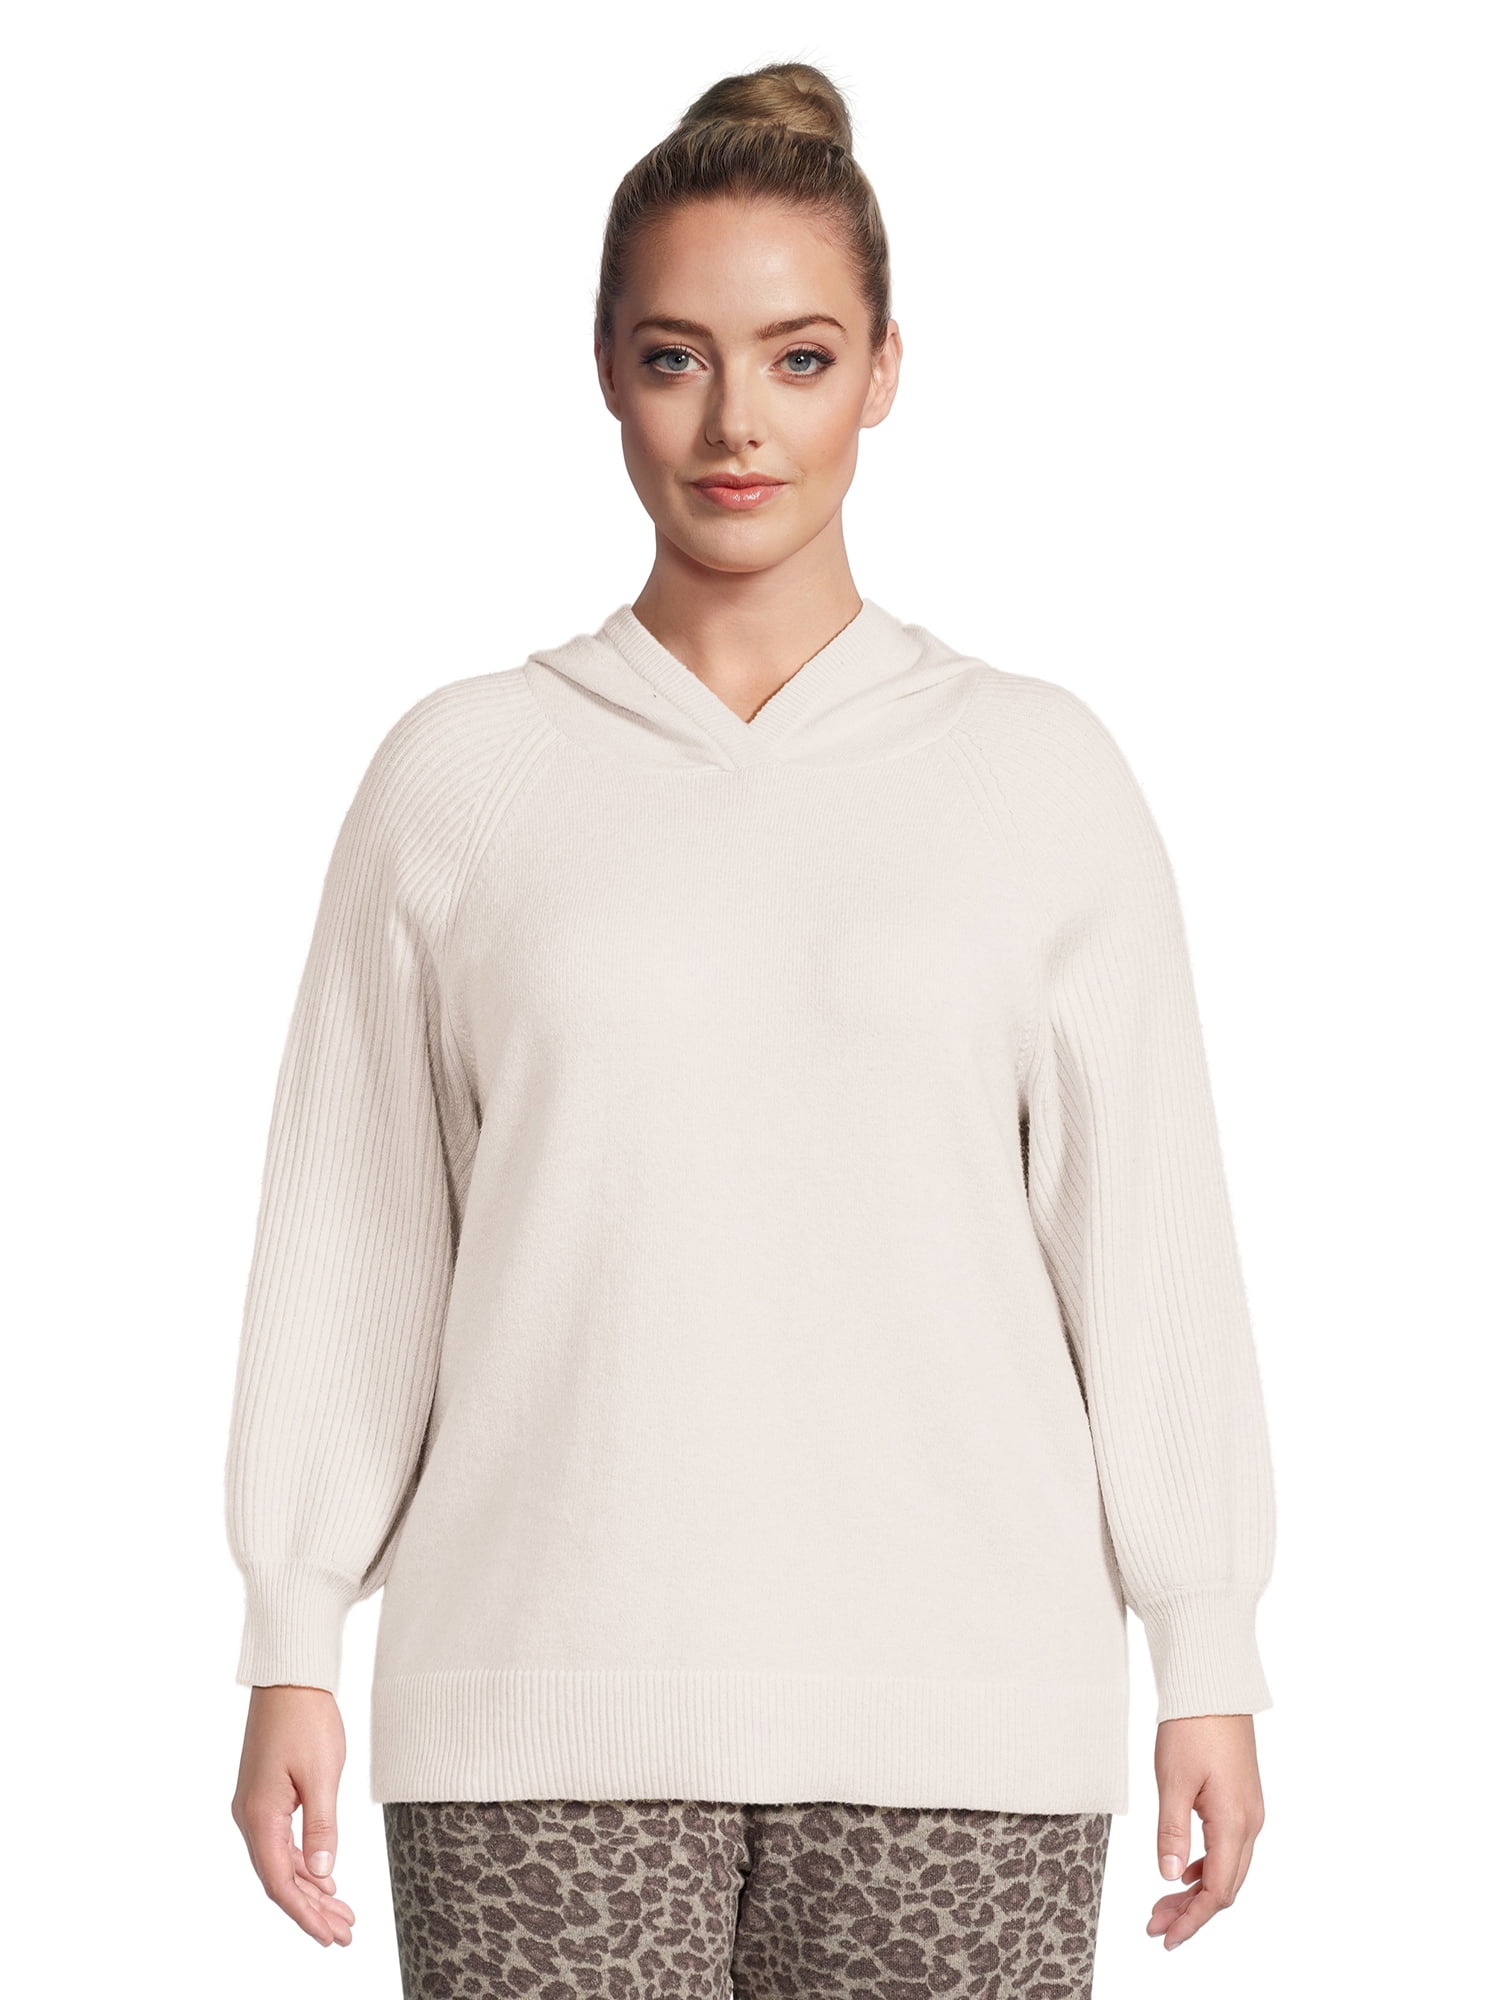 Terra And Sky Women S Plus Size Raglan Hoodie Sweater